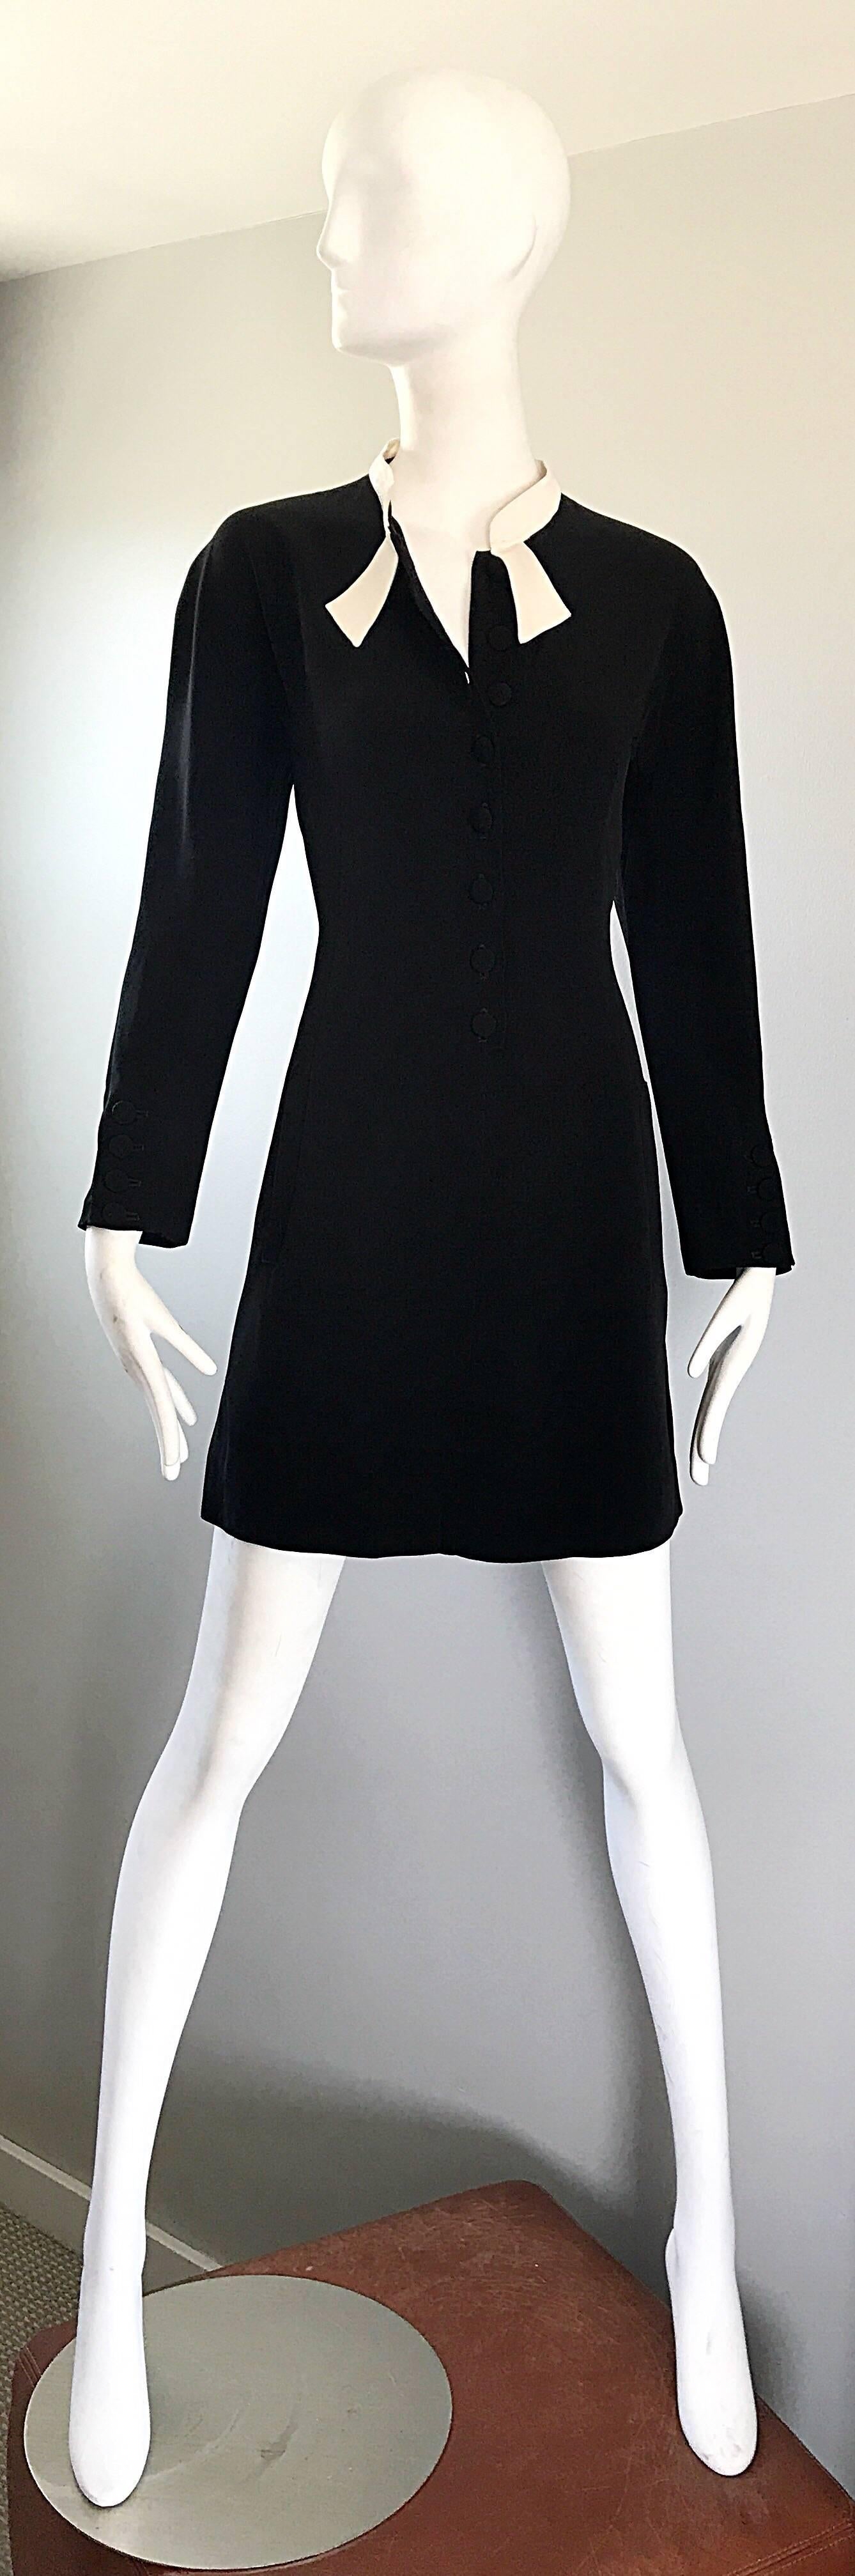 Vintage Kritizia Black and White Long Sleeve Chic Tailored Tuxedo Dress  3